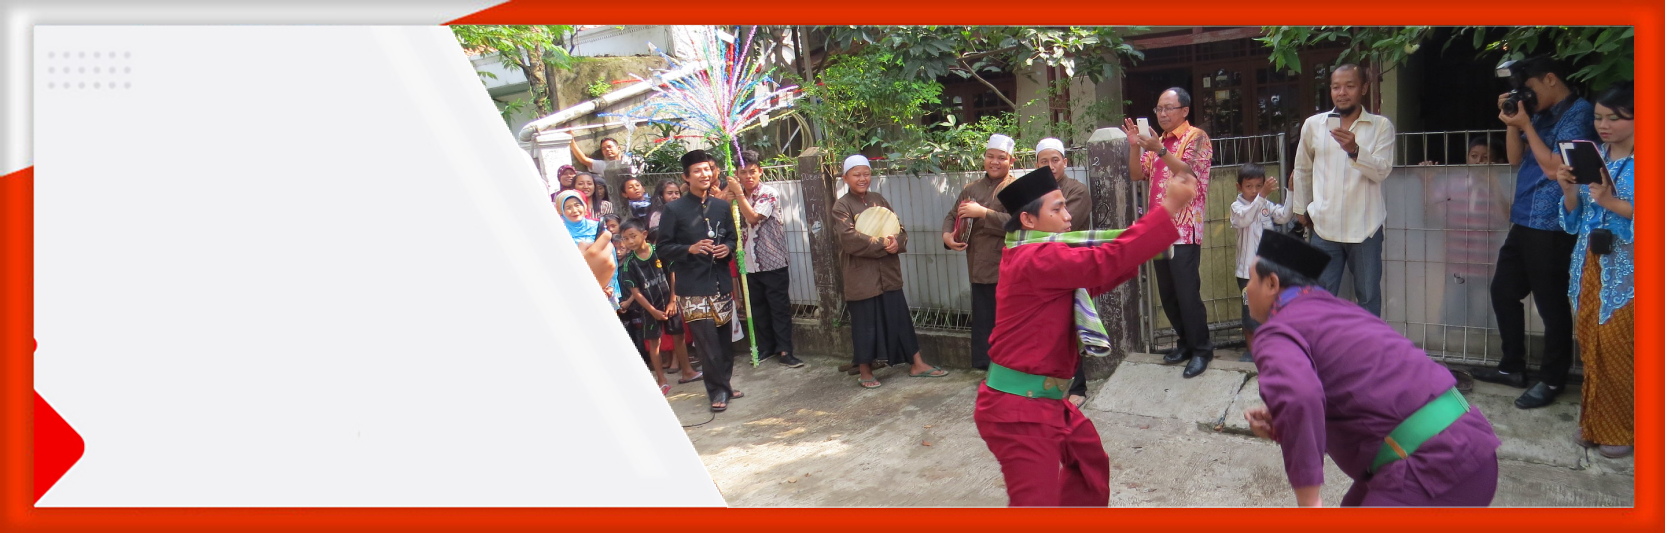 Mengenal Tradisi Betawi Jakarta: Palang Pintu, Nyorog, Bikin Rume, dan Bledugan